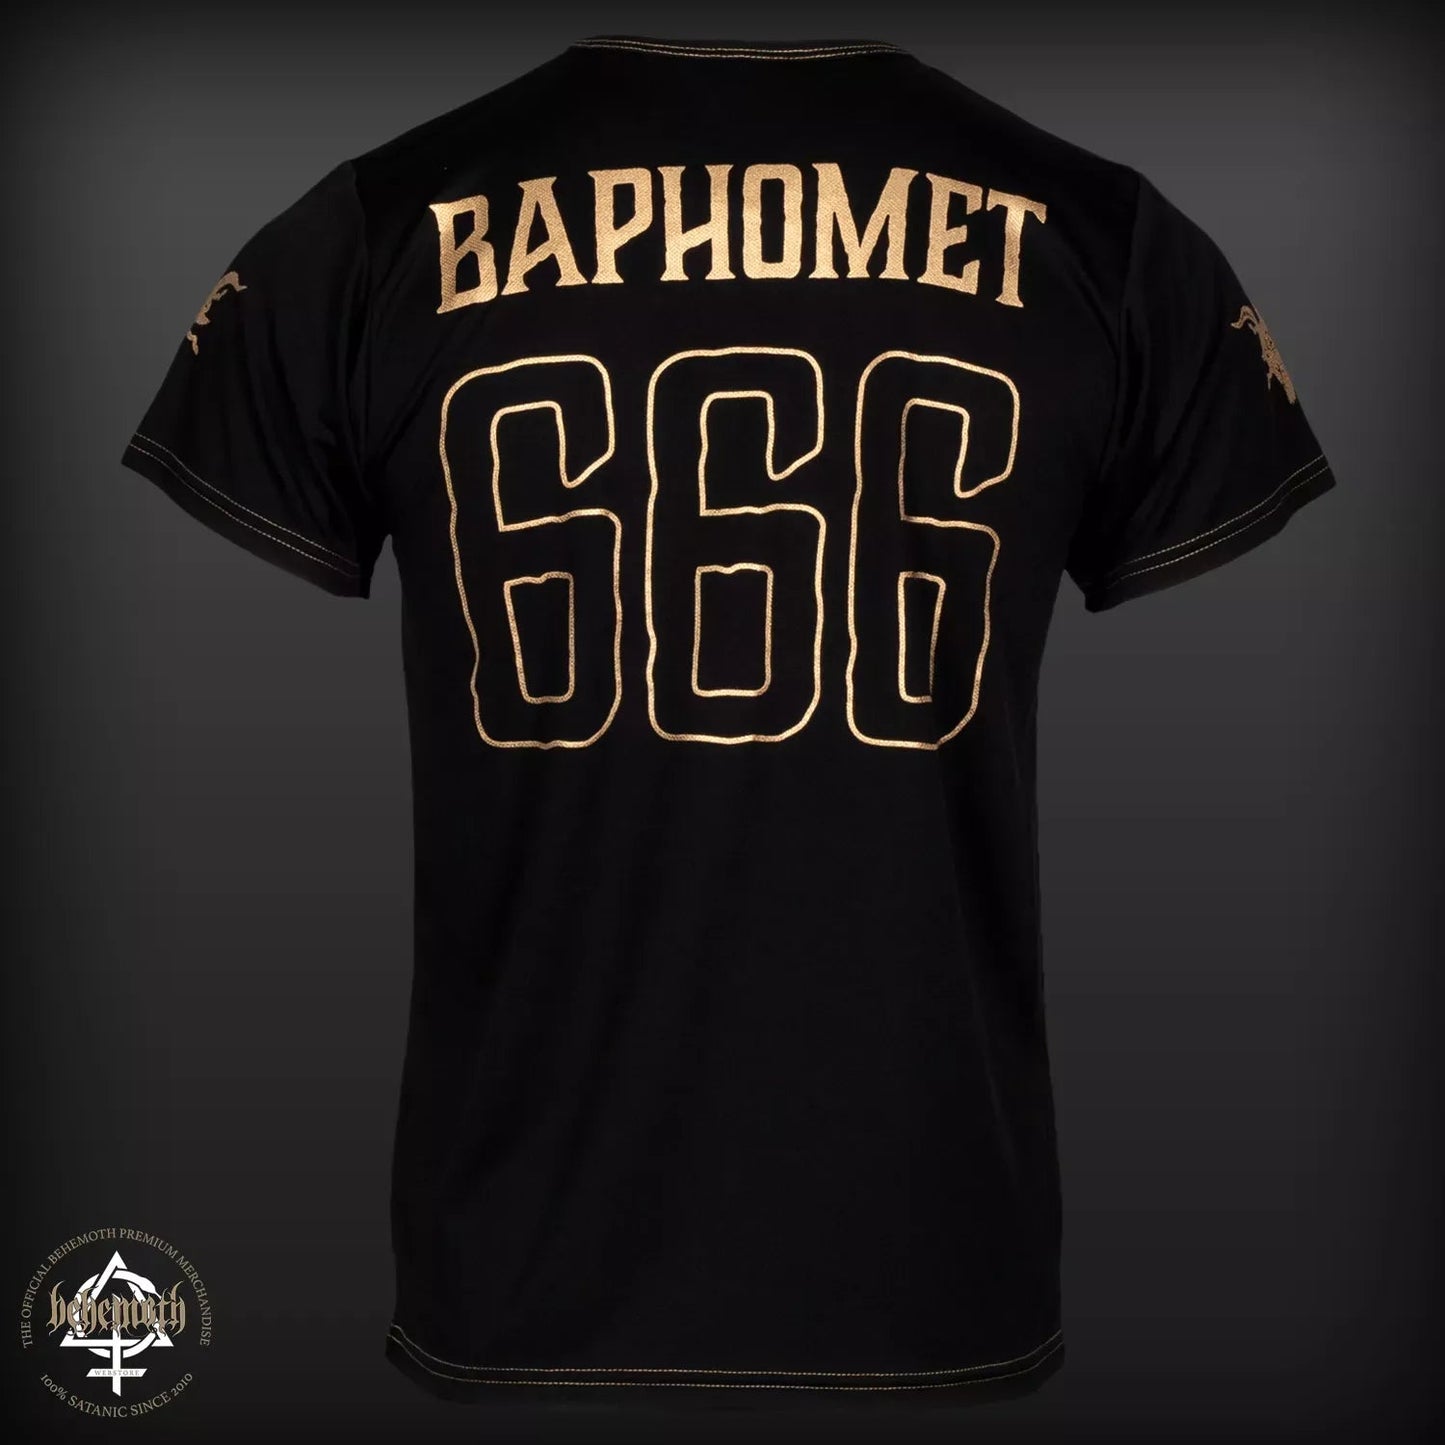 'Baphomet' Behemoth football jersey shirt